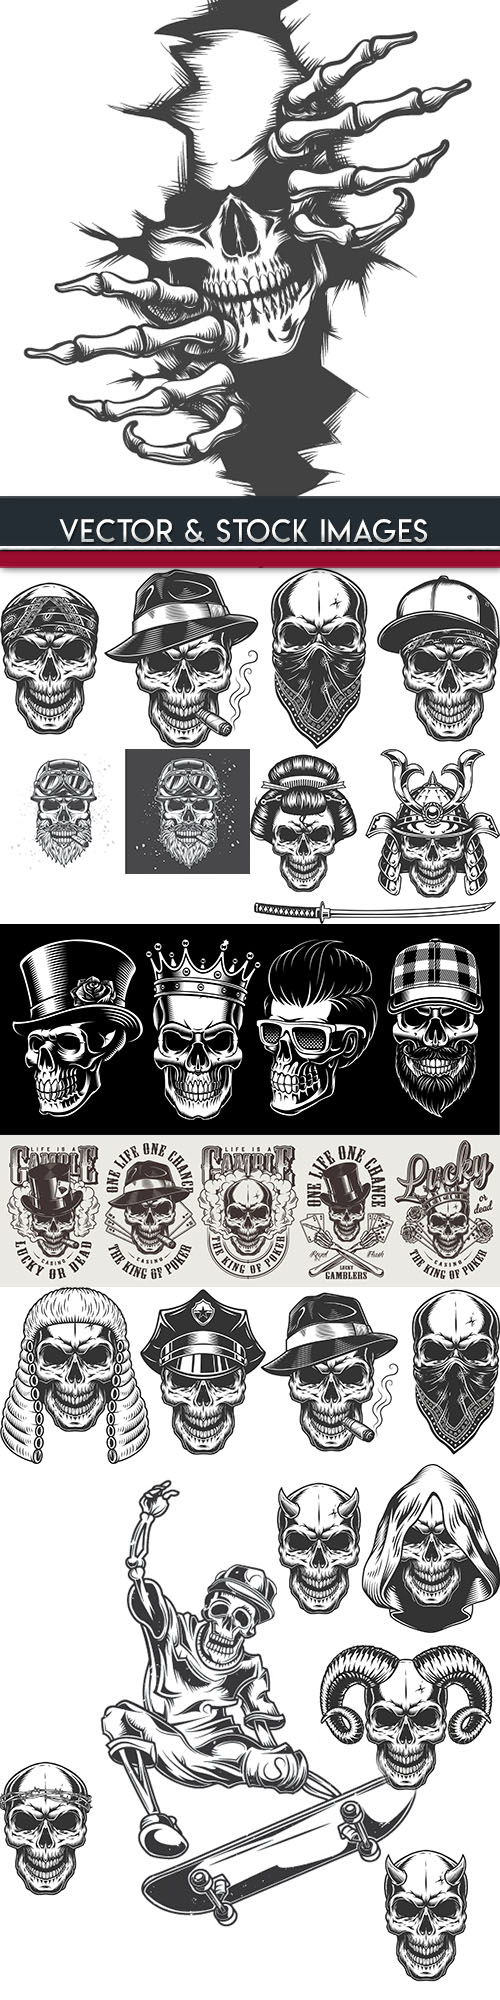 Skull and accessories grunge label drawn design 5